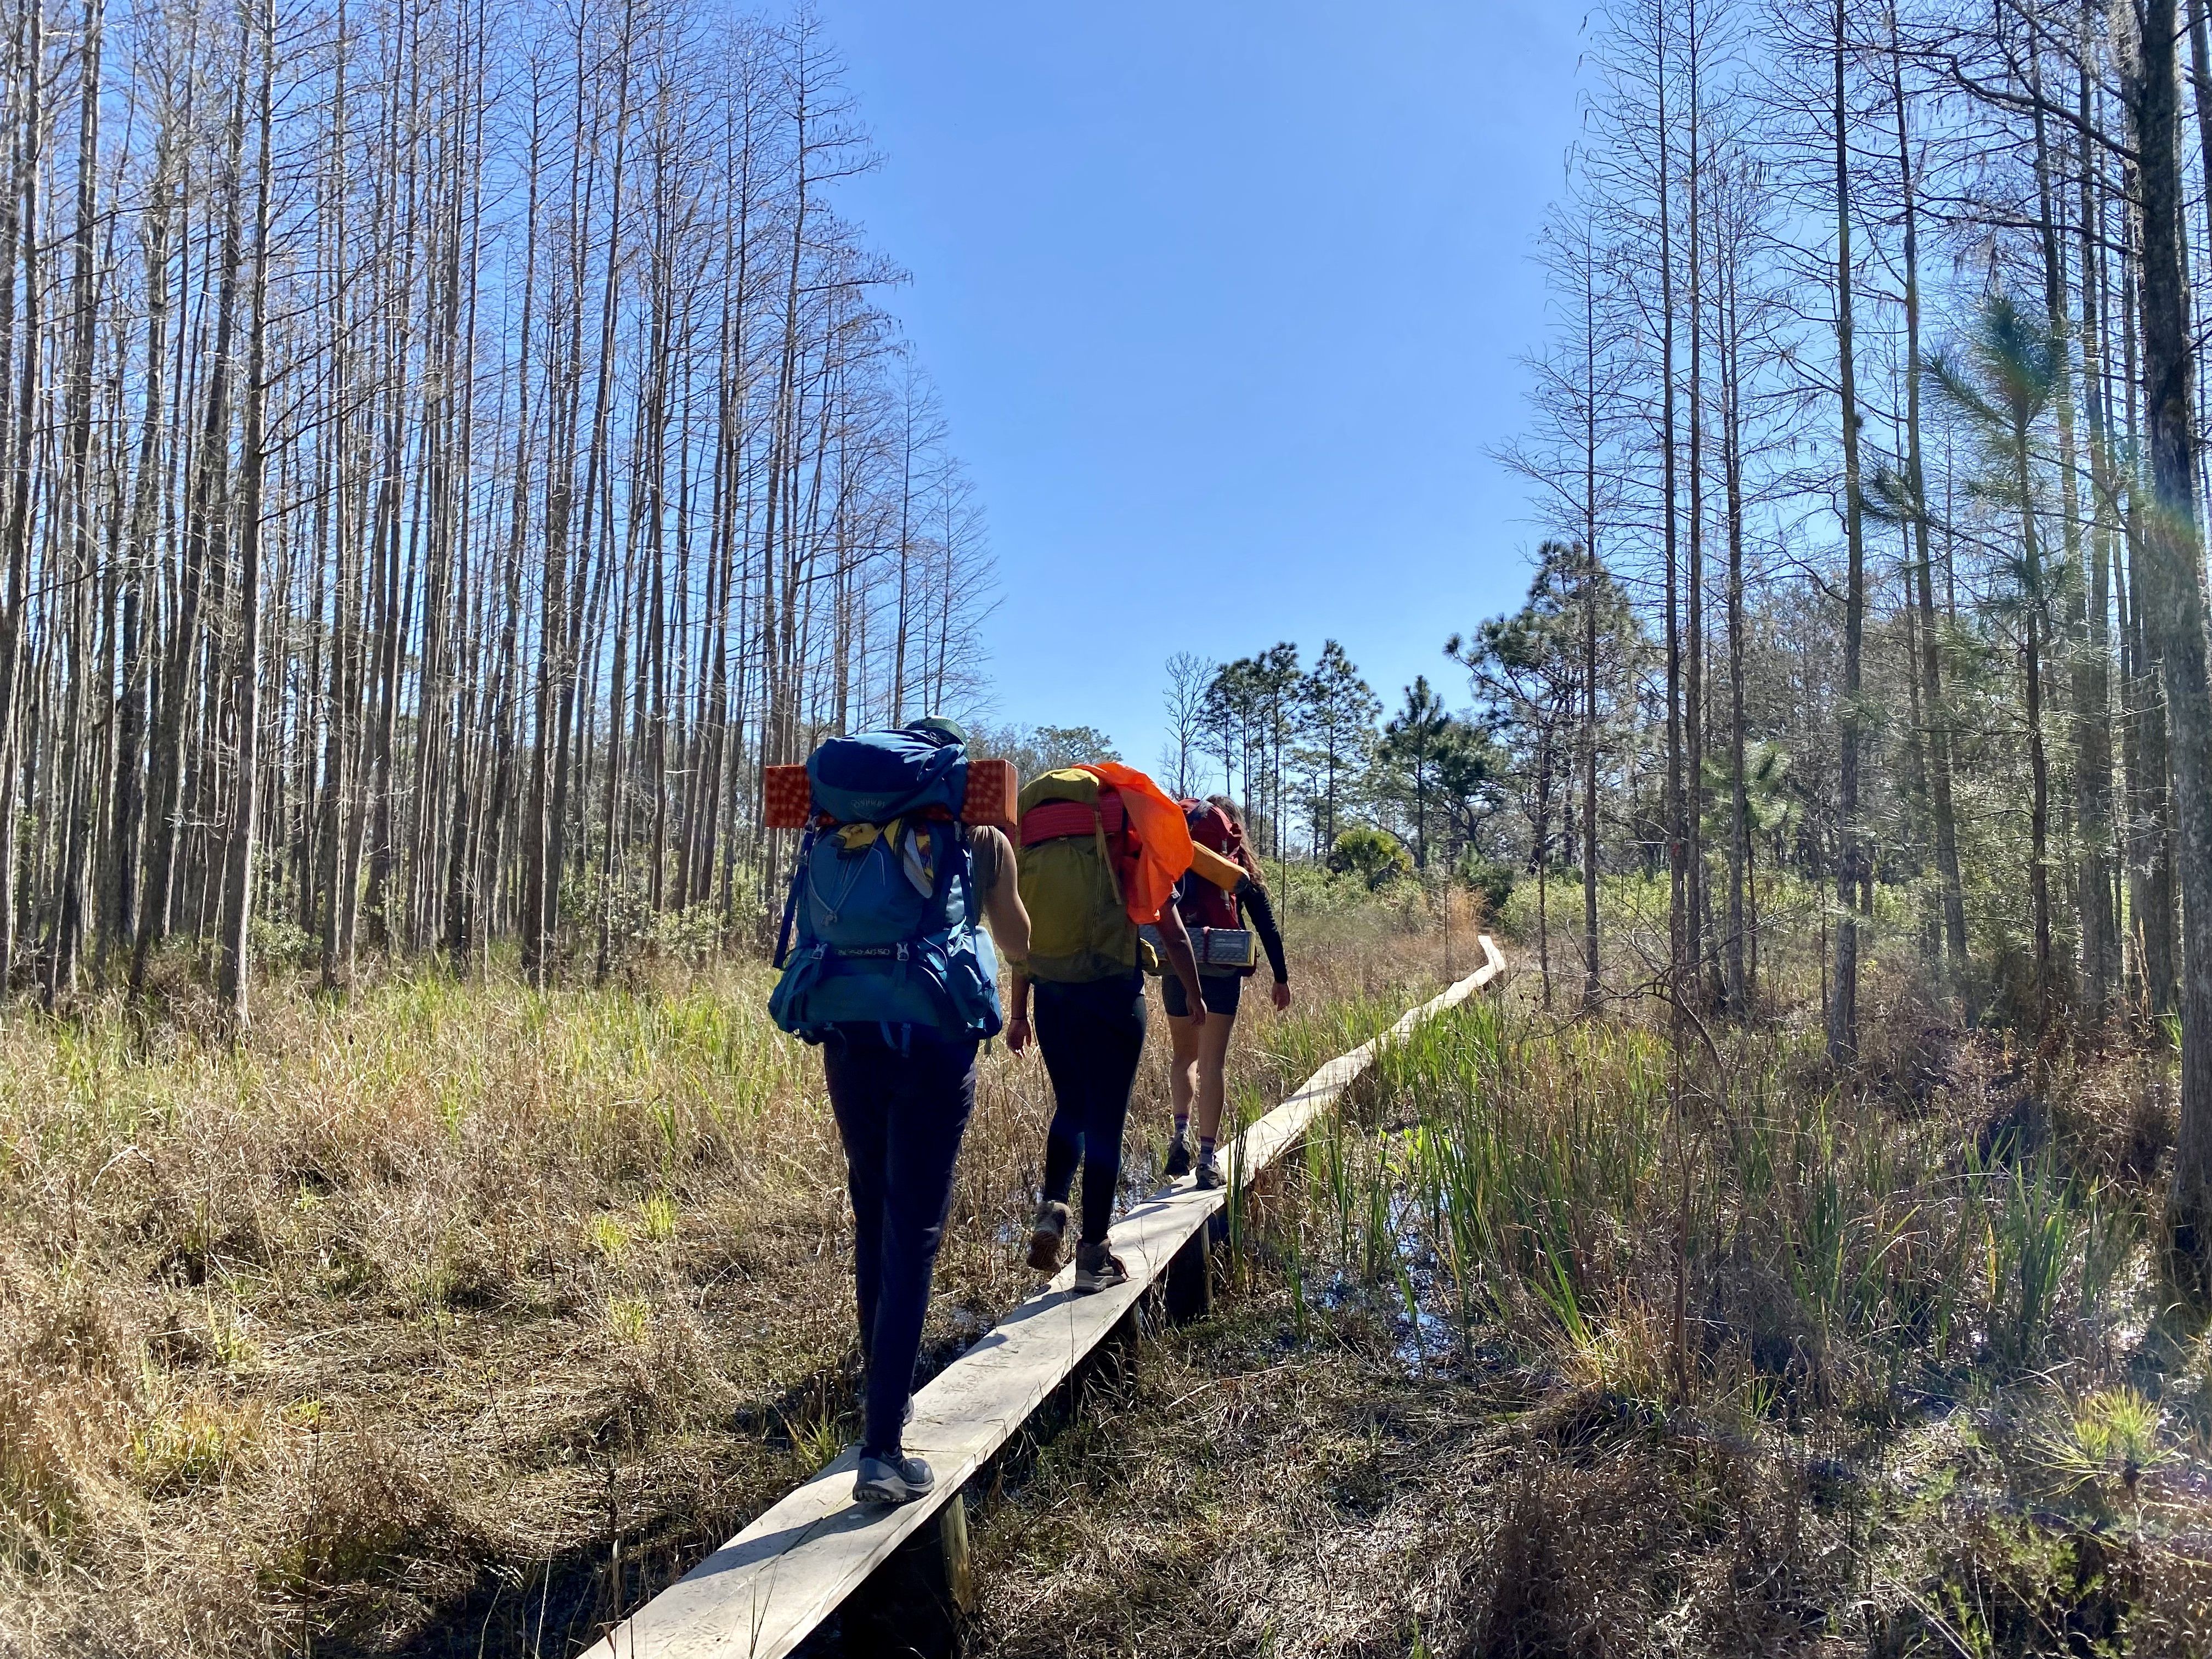 Hikers walk along a boardwalk through the Green Swamp